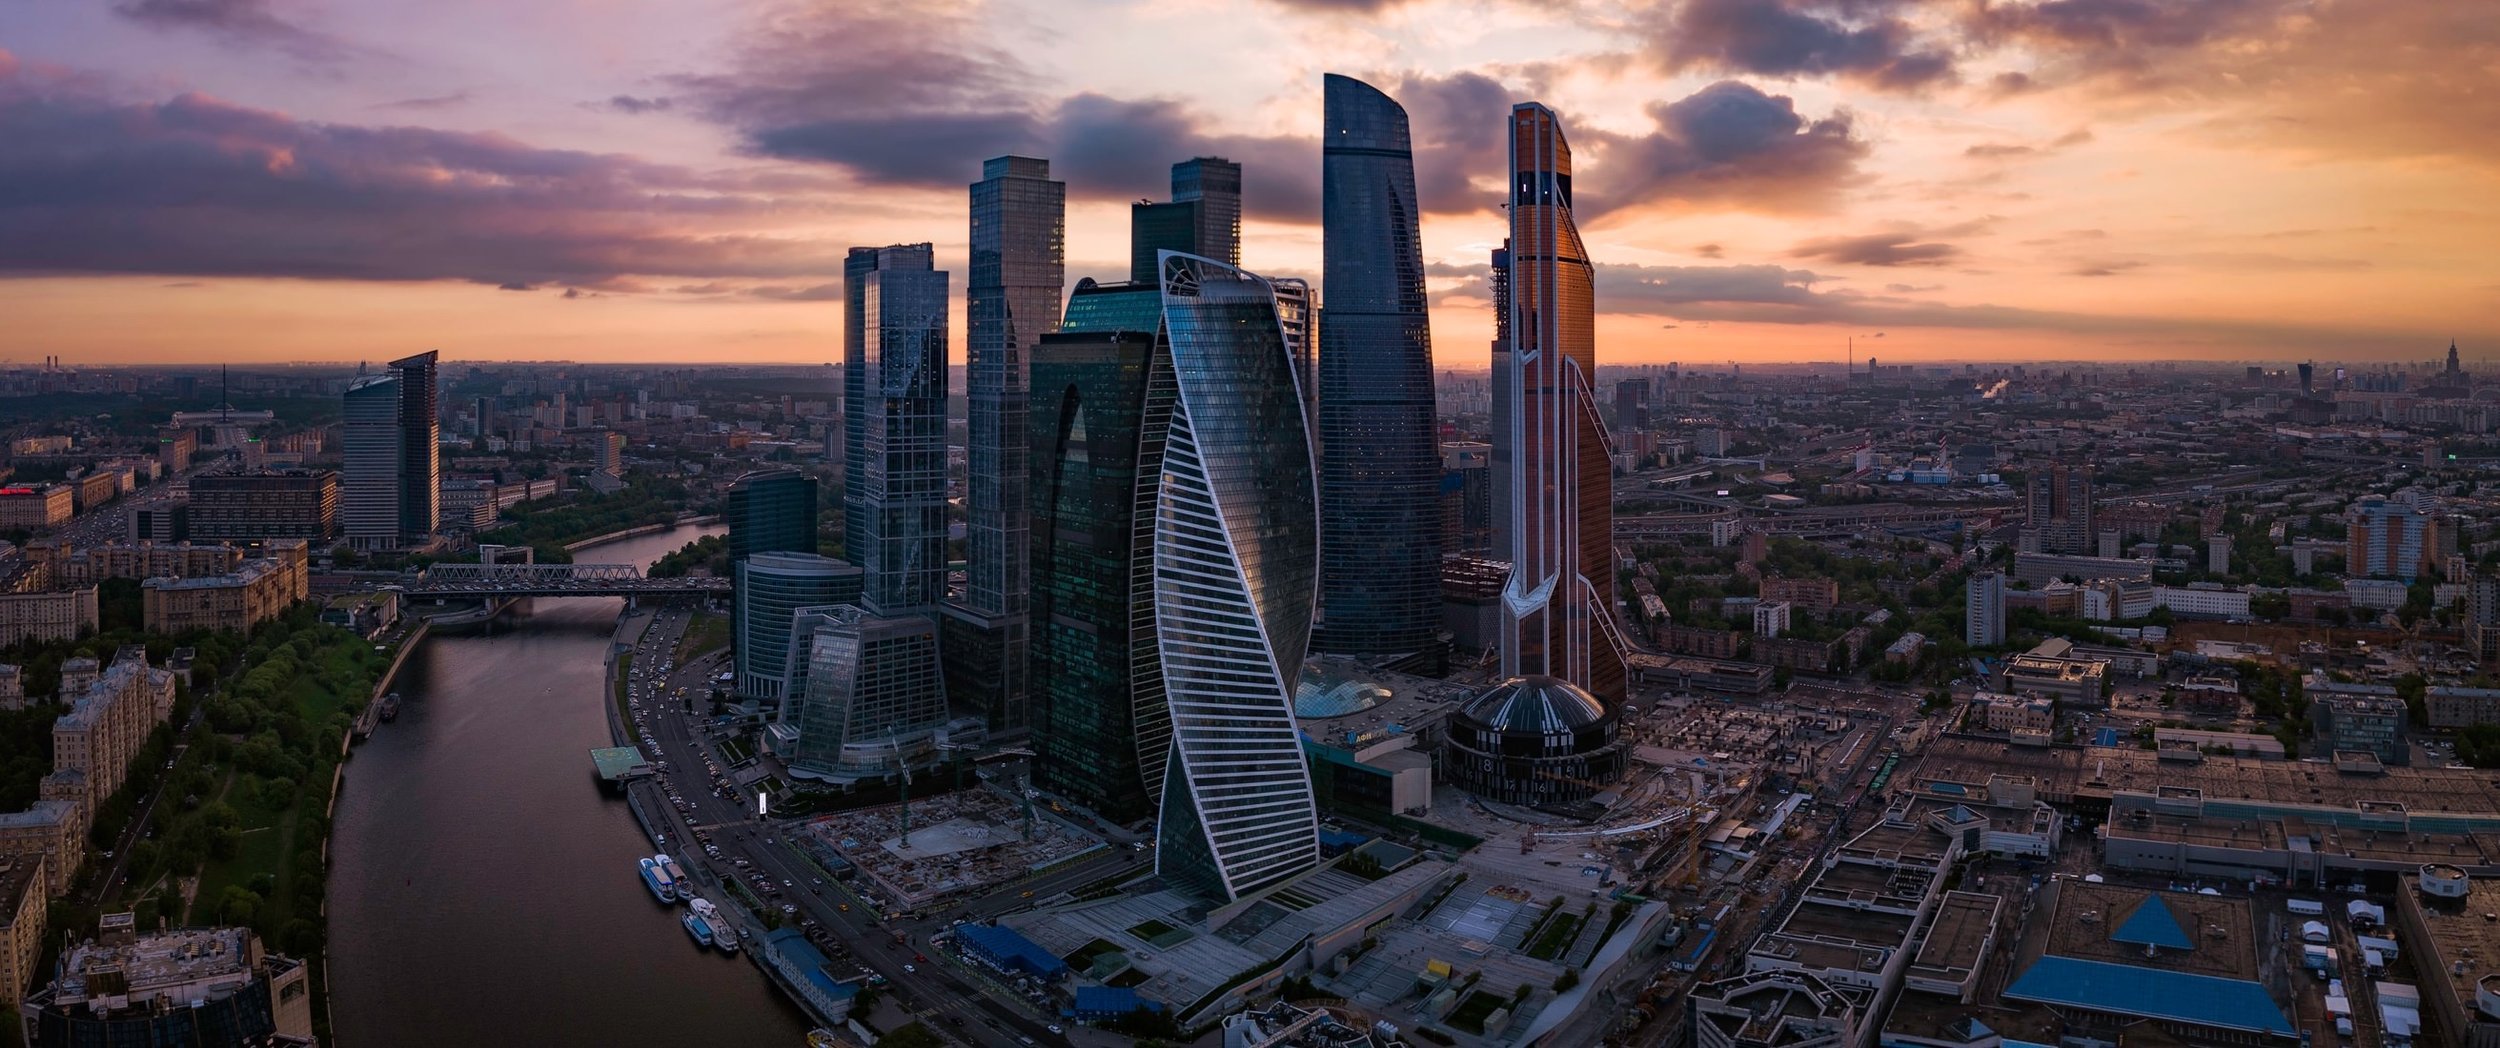 Moscow City horizontal pano 2018 copy.jpg